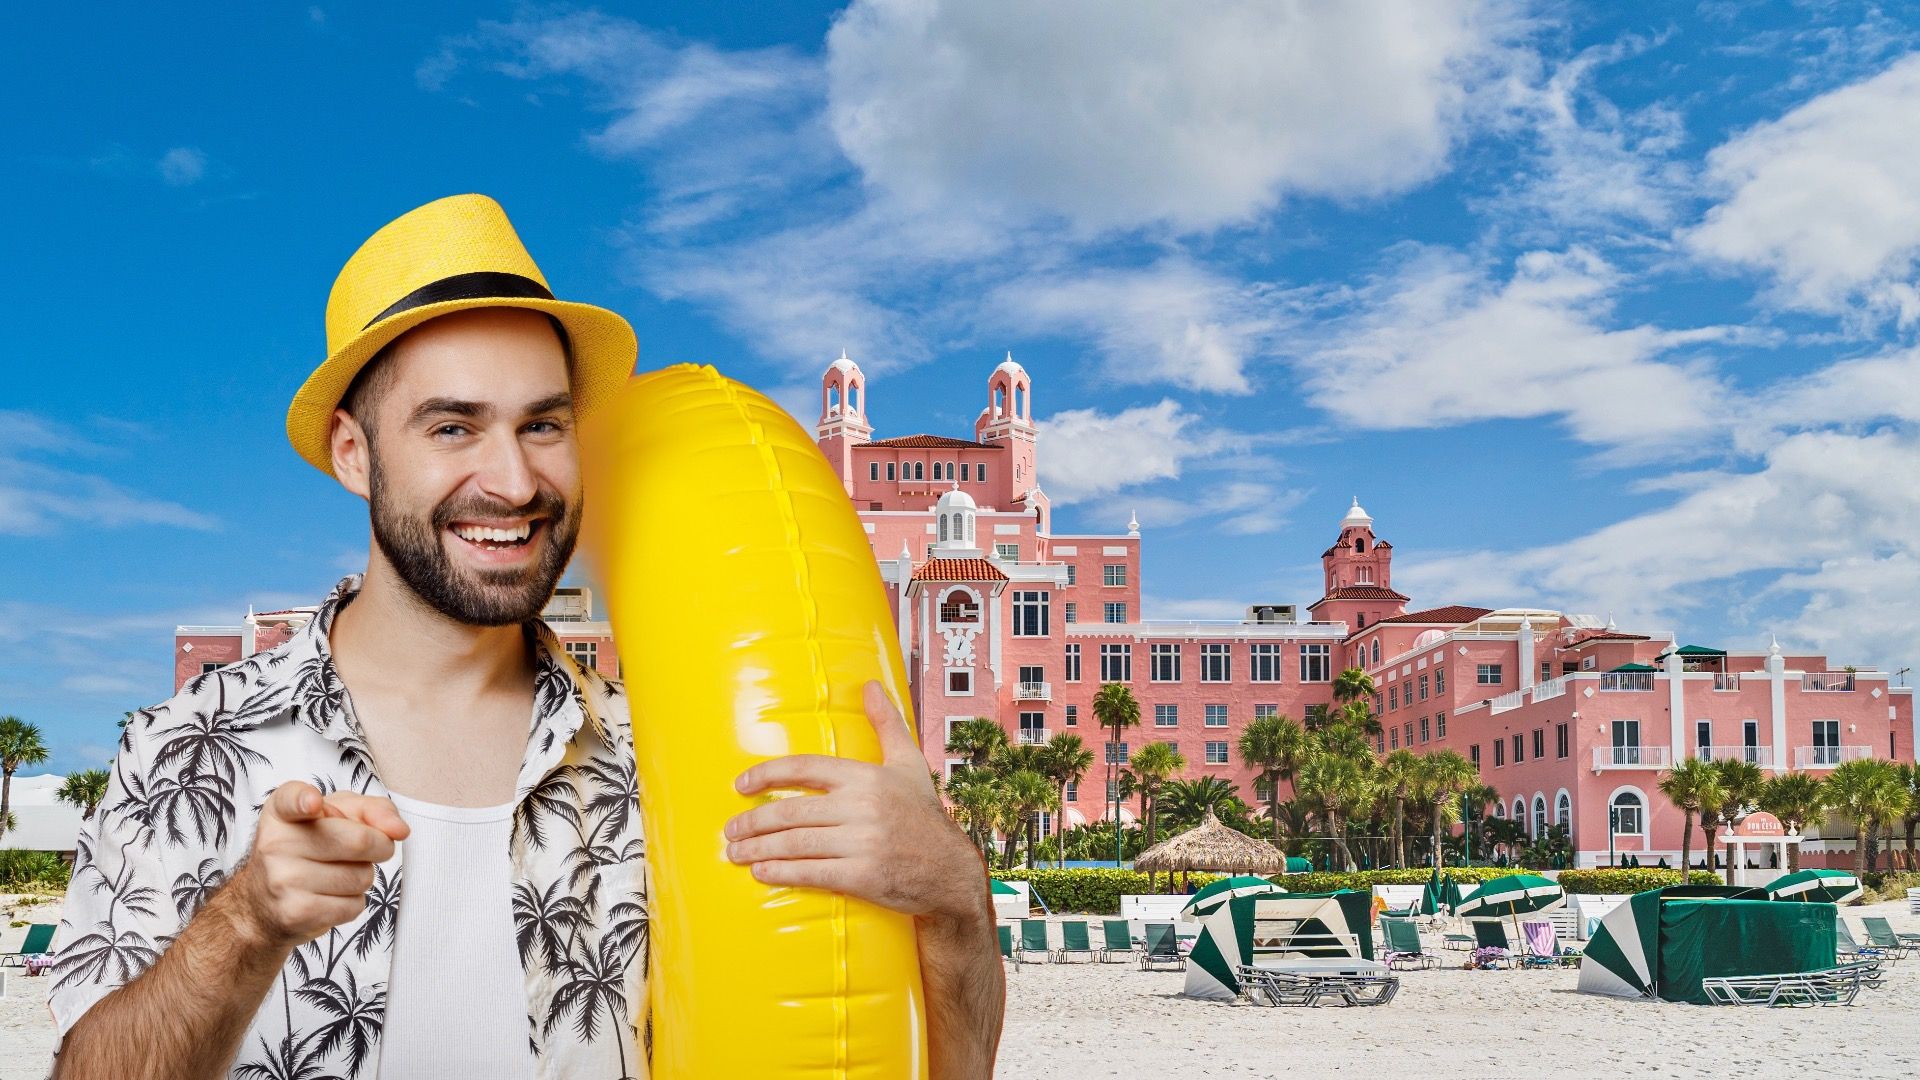 The Don Cesar Hotel along the gulf coast of Florida